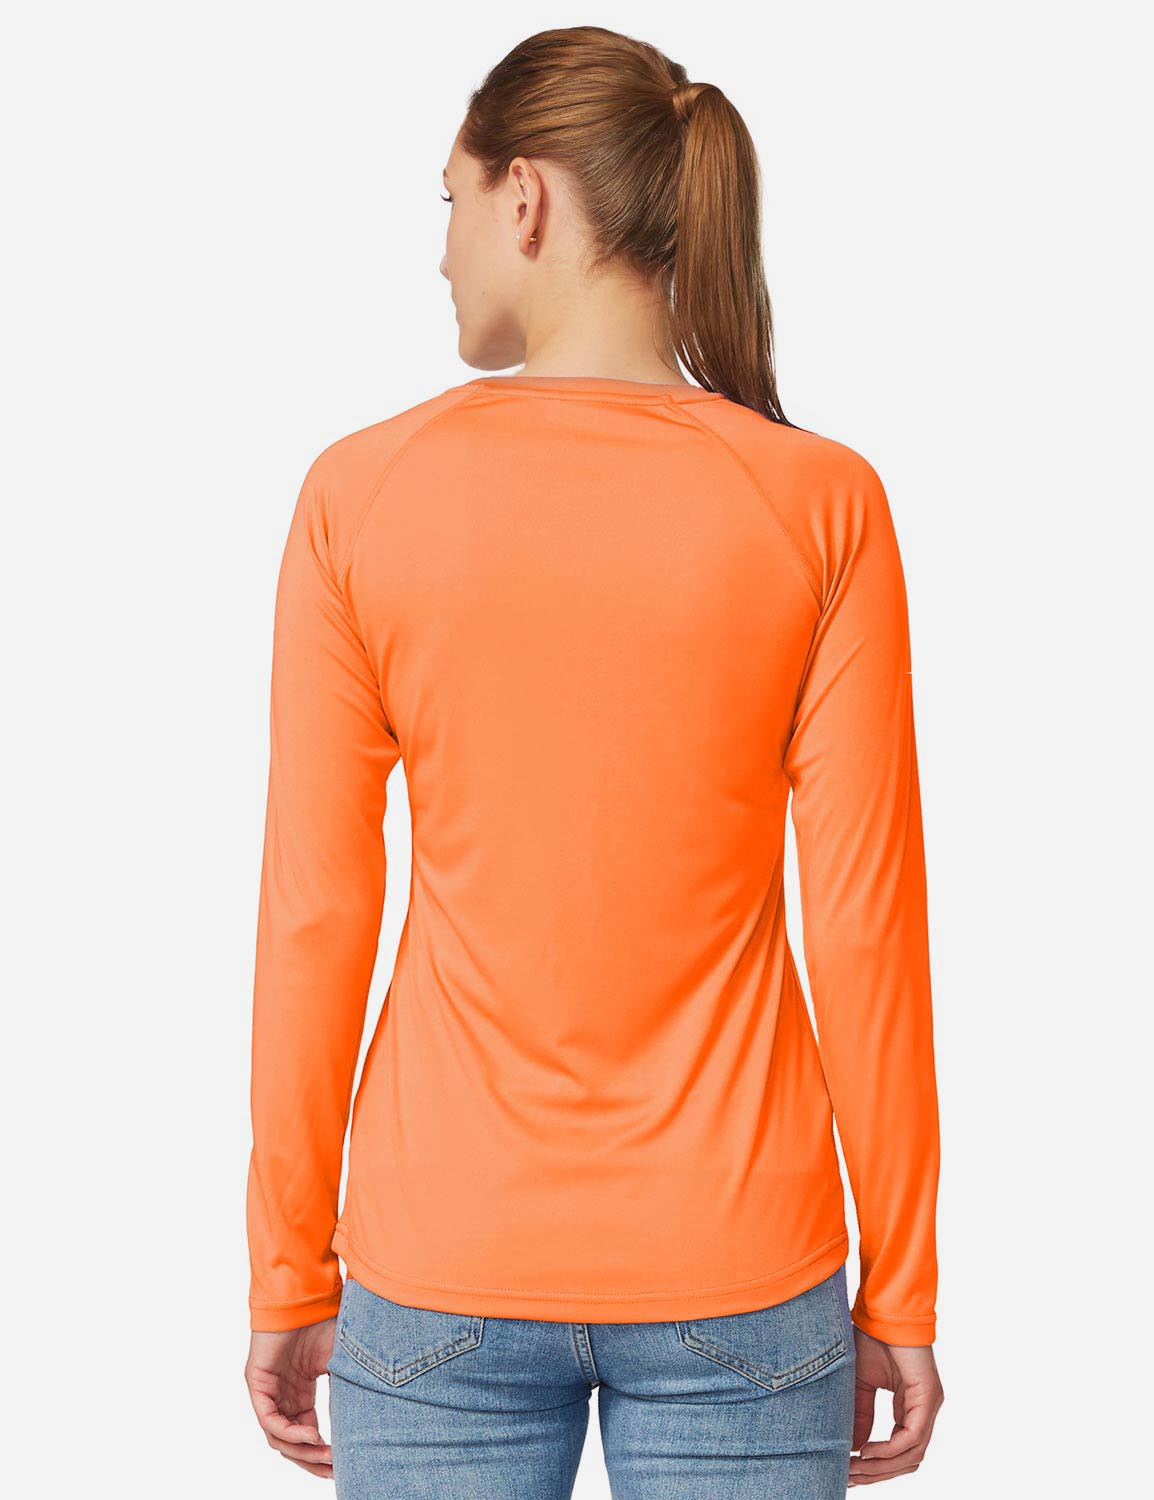 Baleaf Women's UPF50+ Loose Fit Crew Neck Casual Long Sleeved Shirt aga001 Orange Back